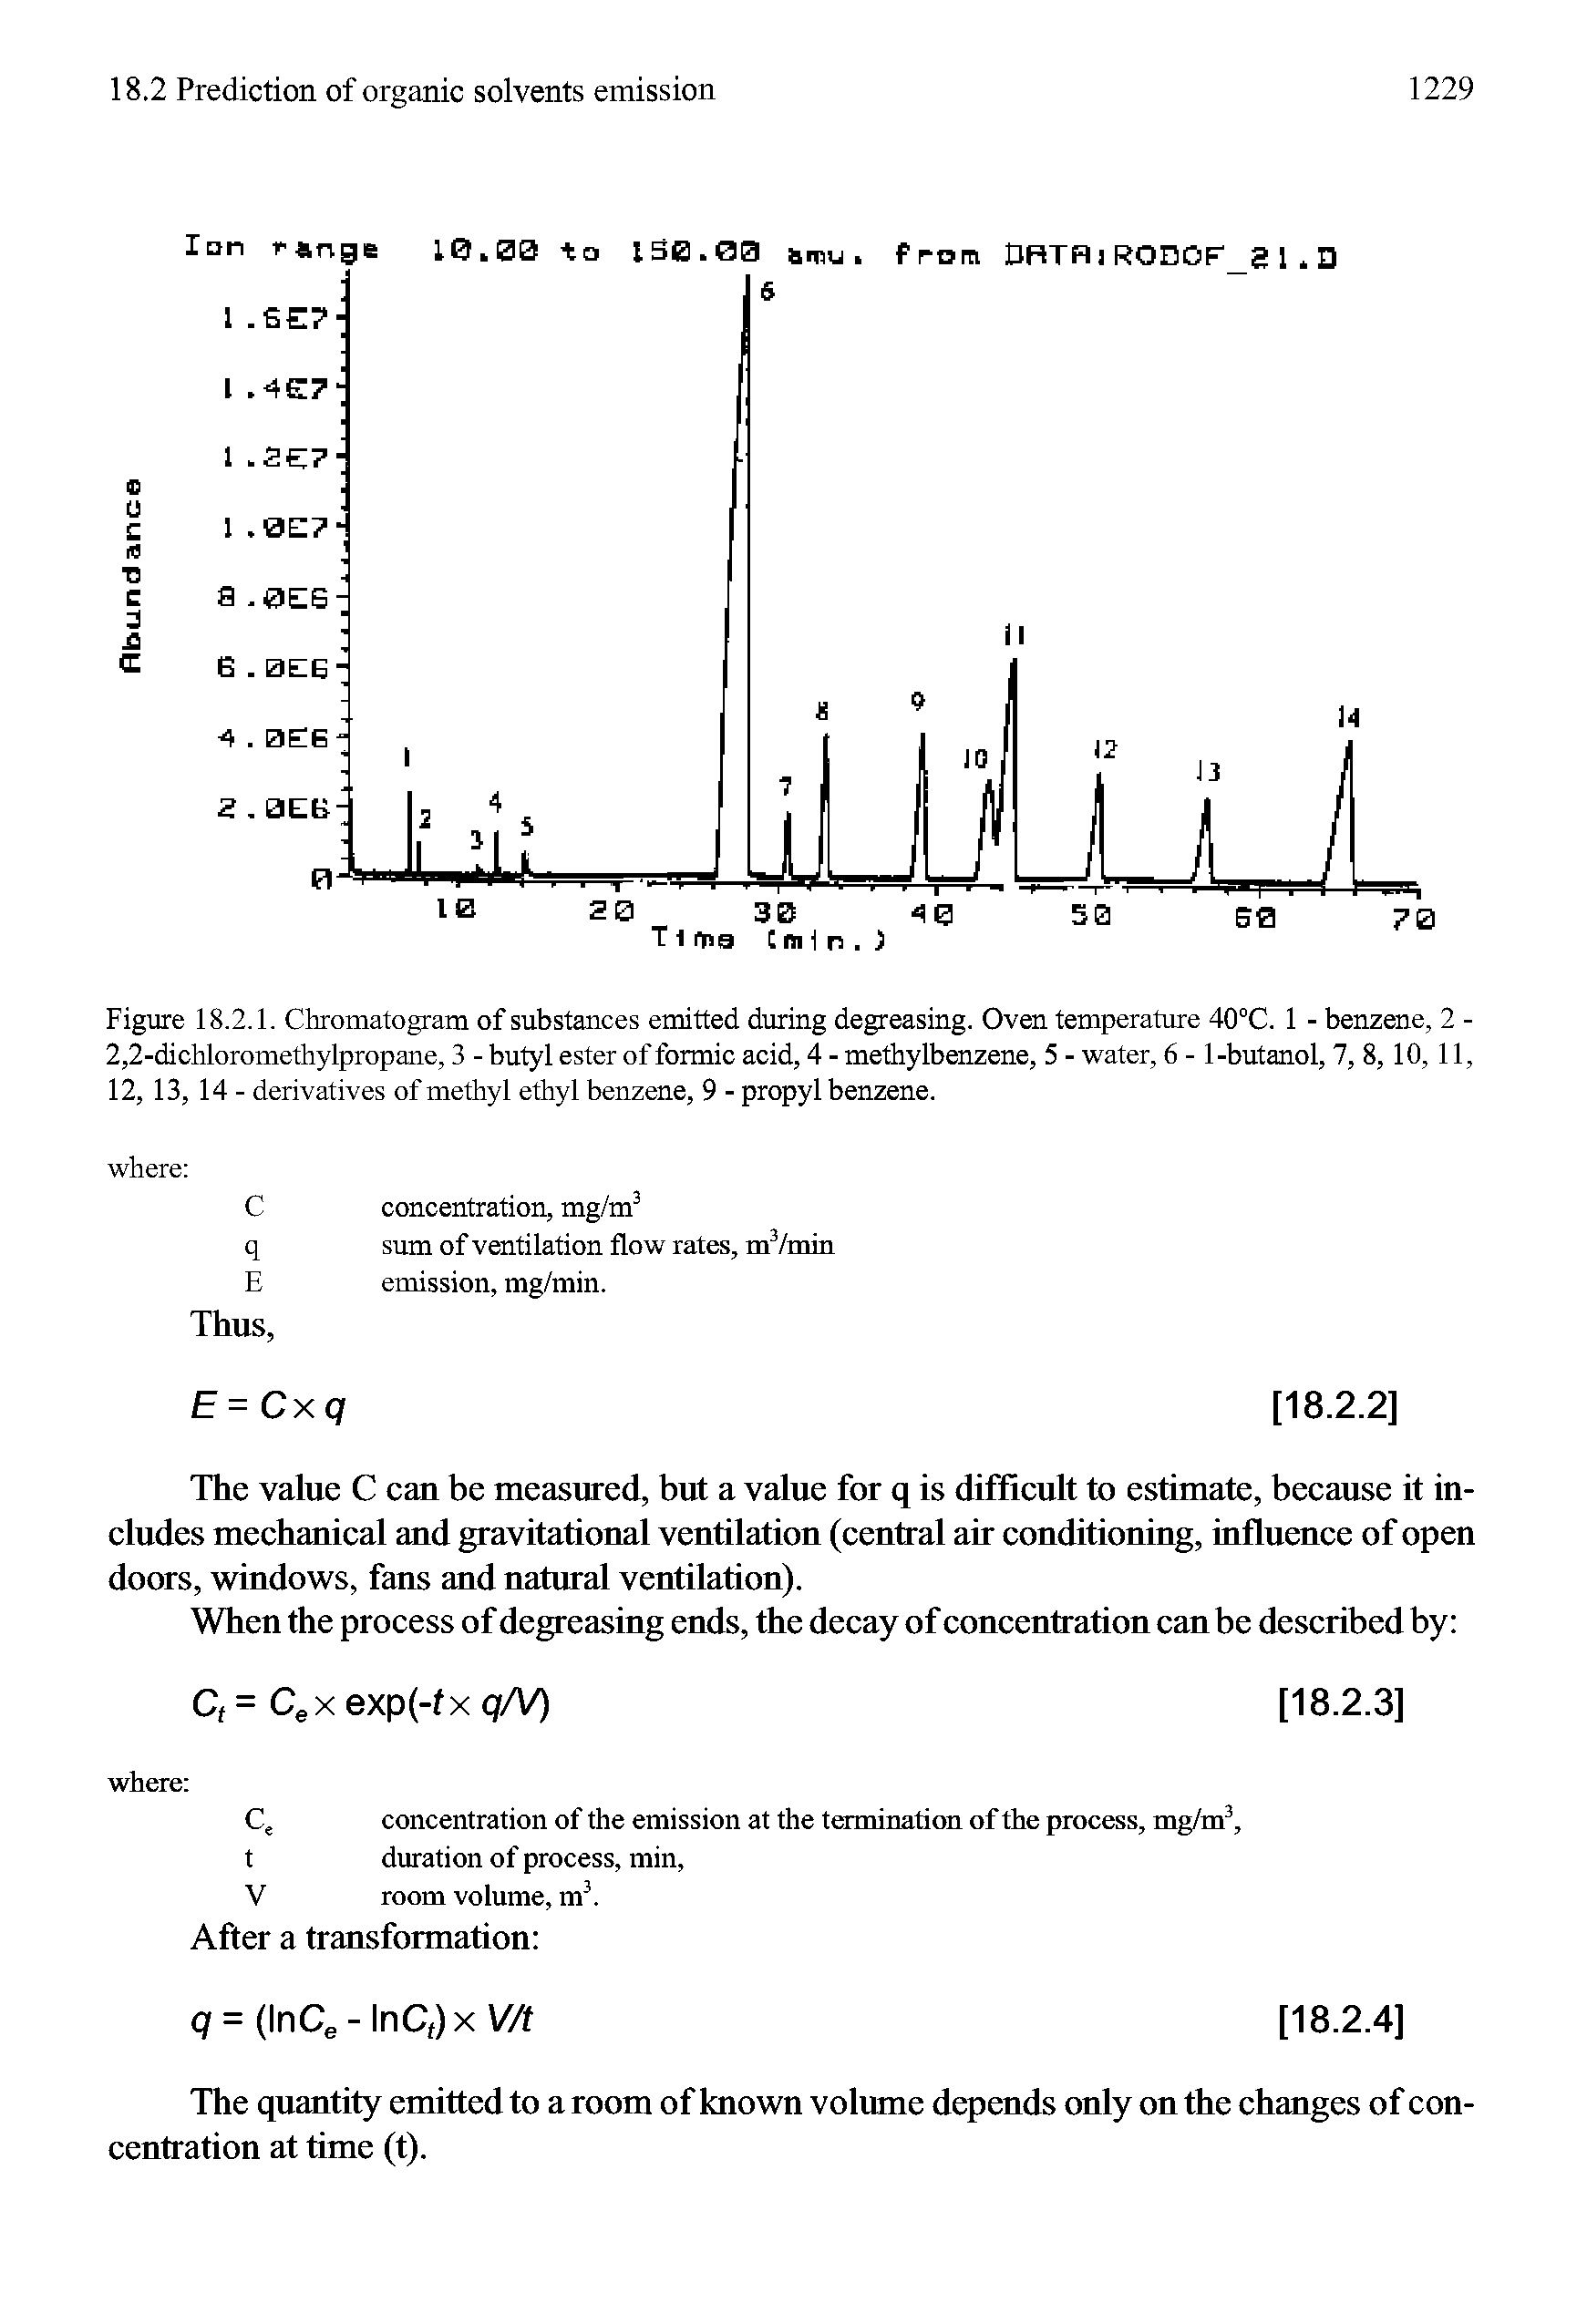 Figure 18.2.1. Chromatogram of substances emitted during degreasing. Oven temperature 40°C. 1 - benzene, 2 -2,2-dichloromethylpropane, 3 - butyl ester of formic acid, 4 - methylbenzene, 5 - water, 6 - 1-butanol, 7, 8,10, 11, 12, 13, 14 - derivatives of methyl ethyl benzene, 9 - propyl benzene.